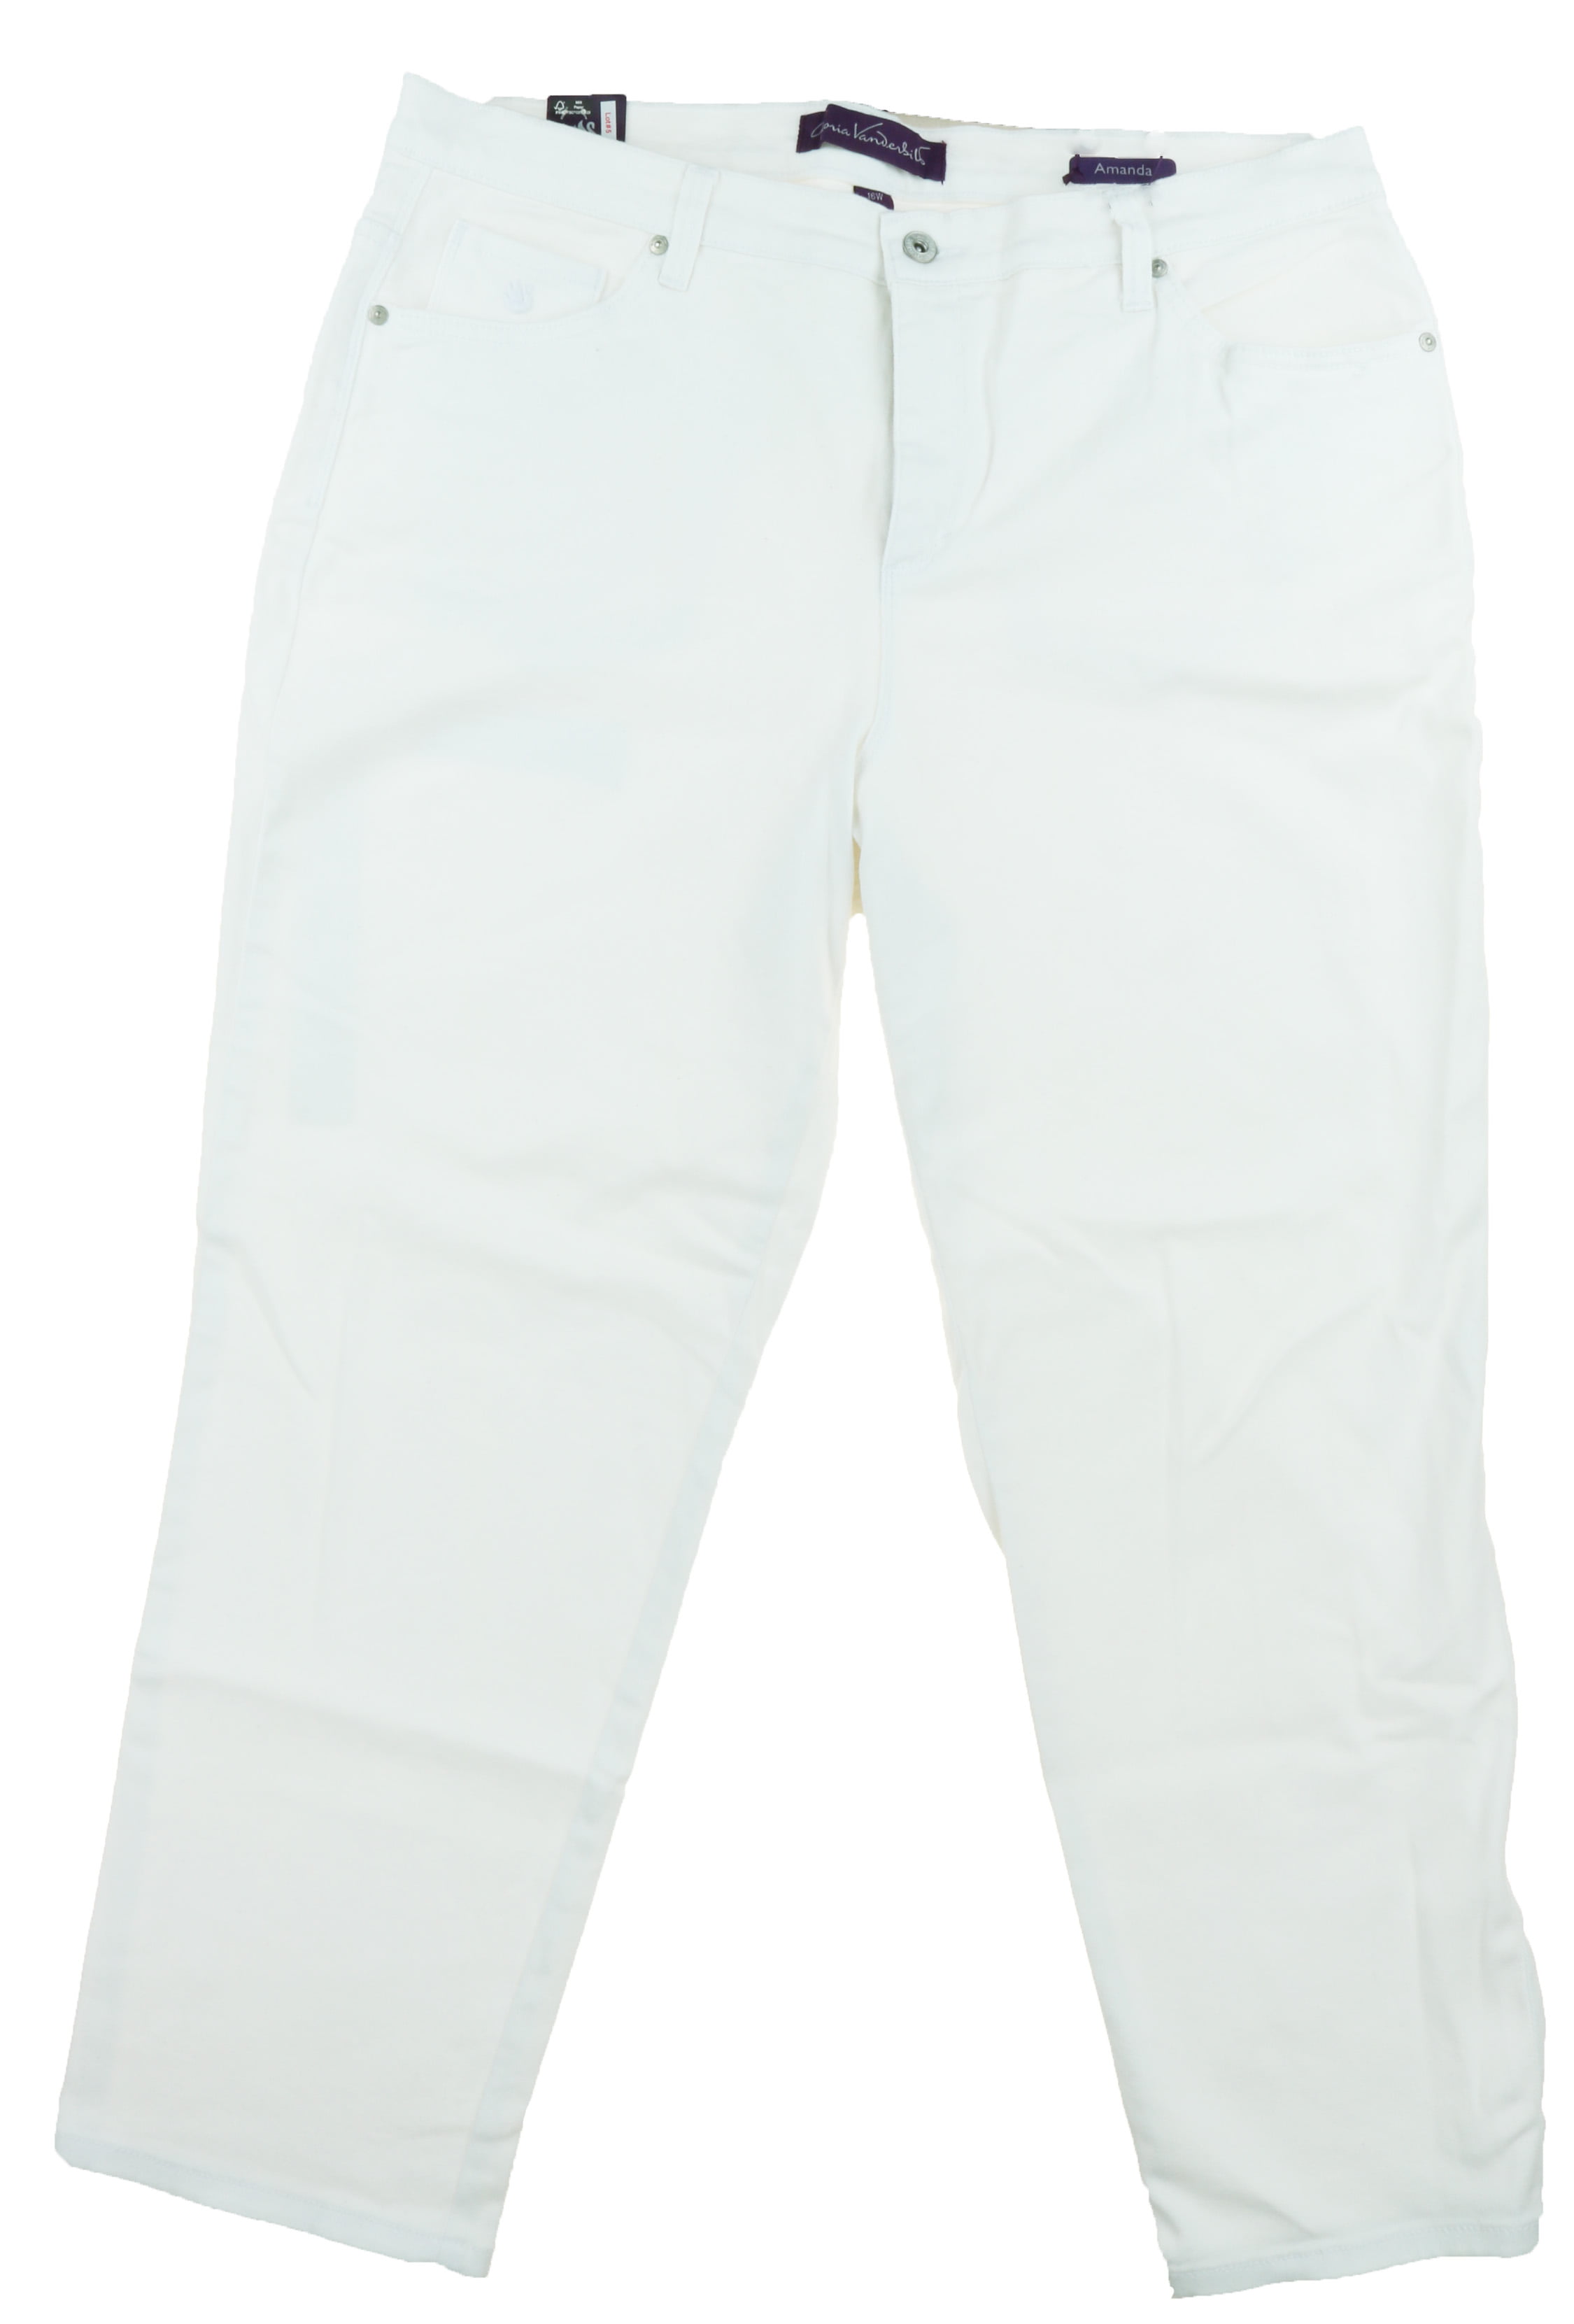 amanda white jeans